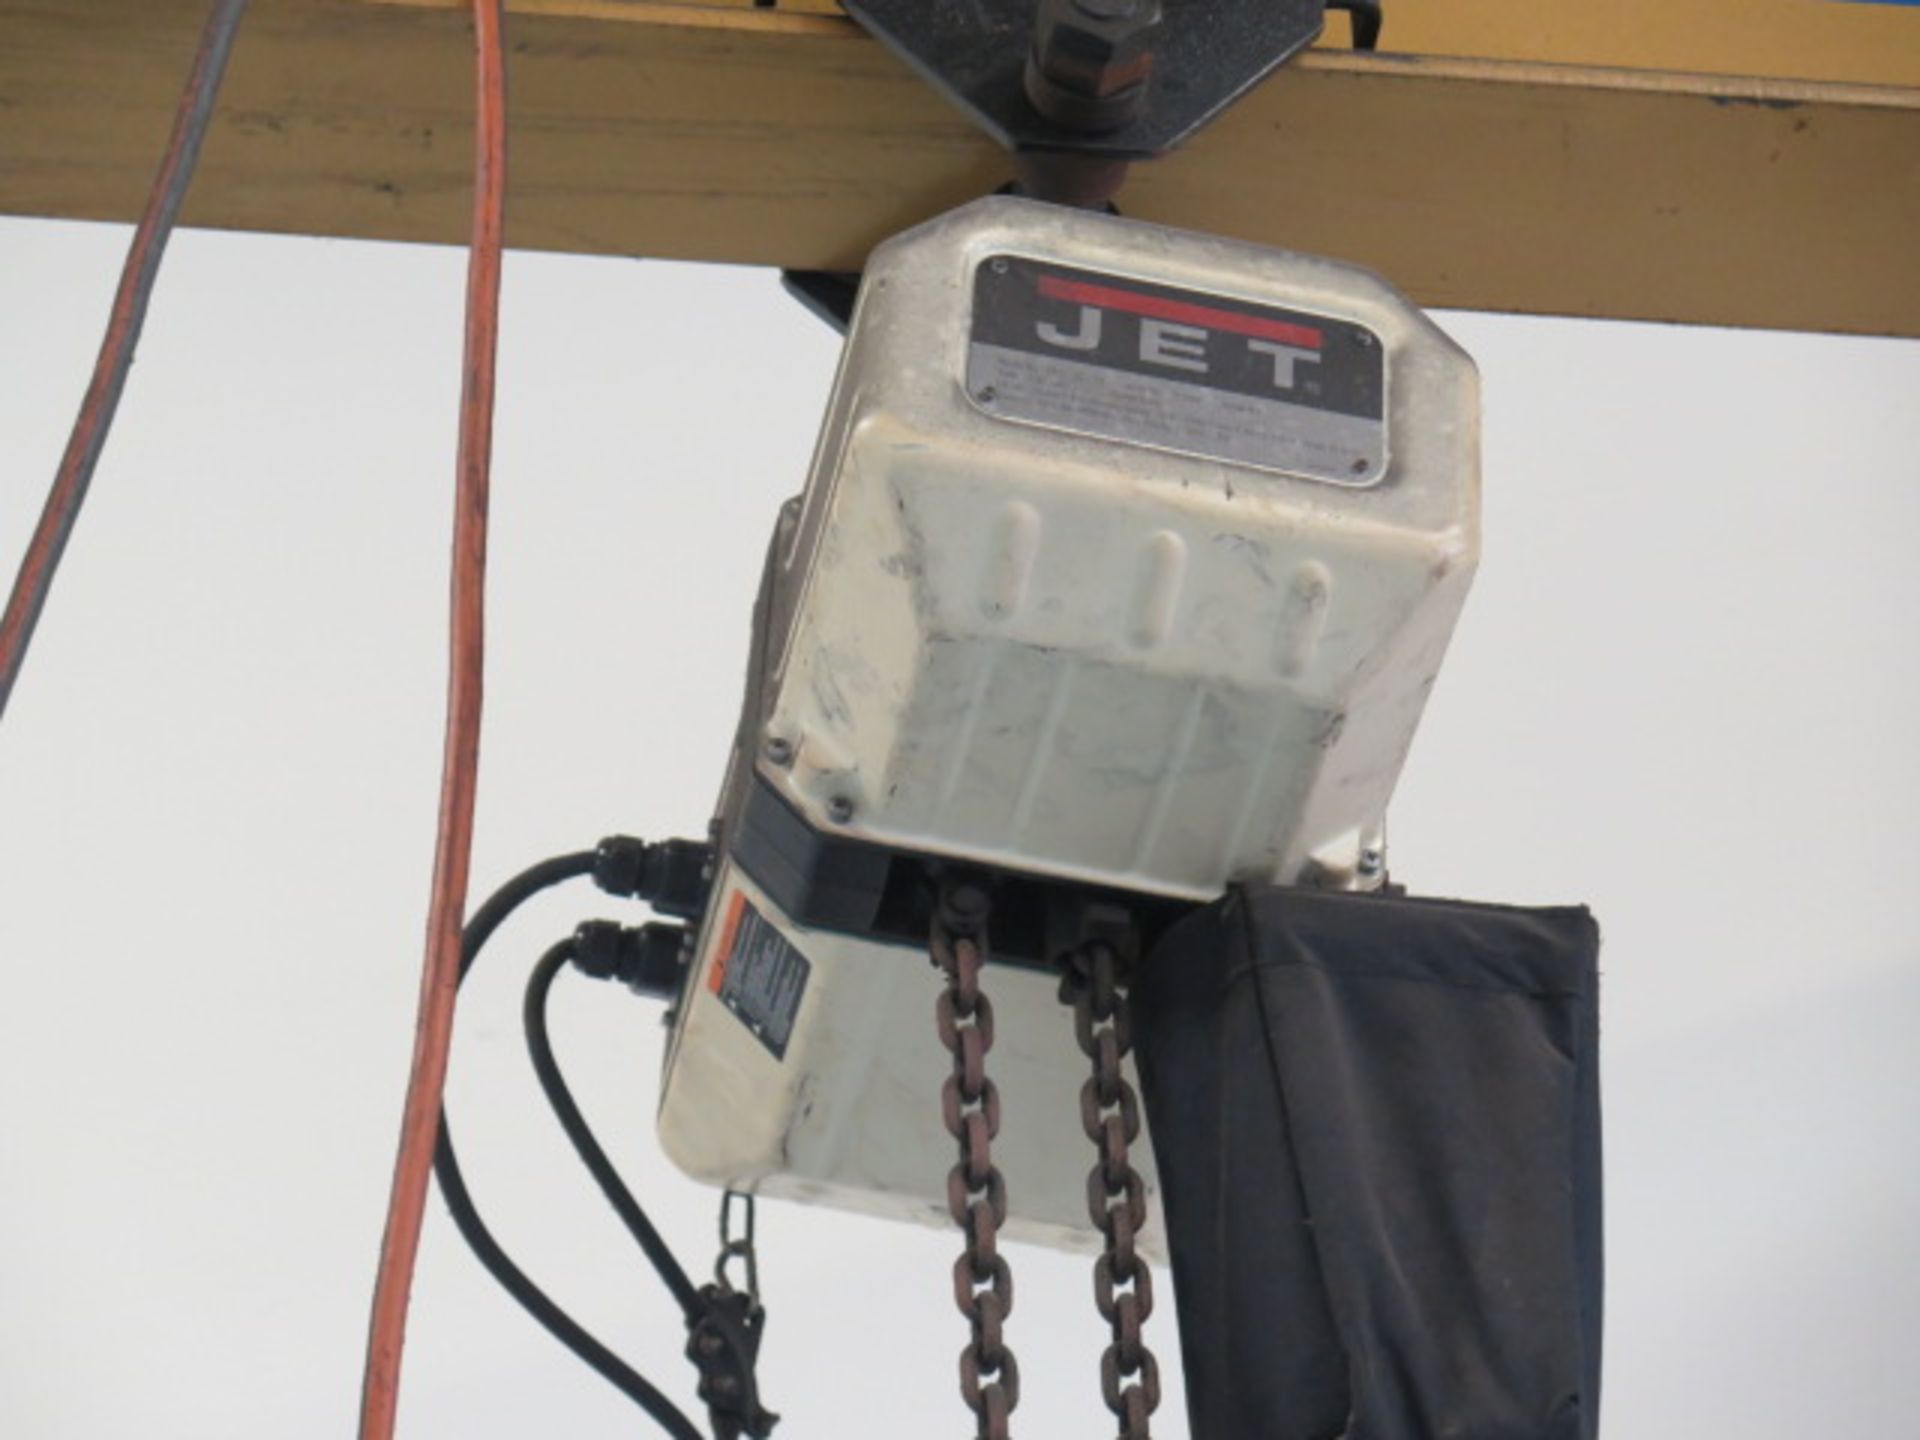 Contrx Crane 2-Ton Cap Floor Mounted Jib Crane w/ Jet 2-Ton Electric Hoist - Image 4 of 6